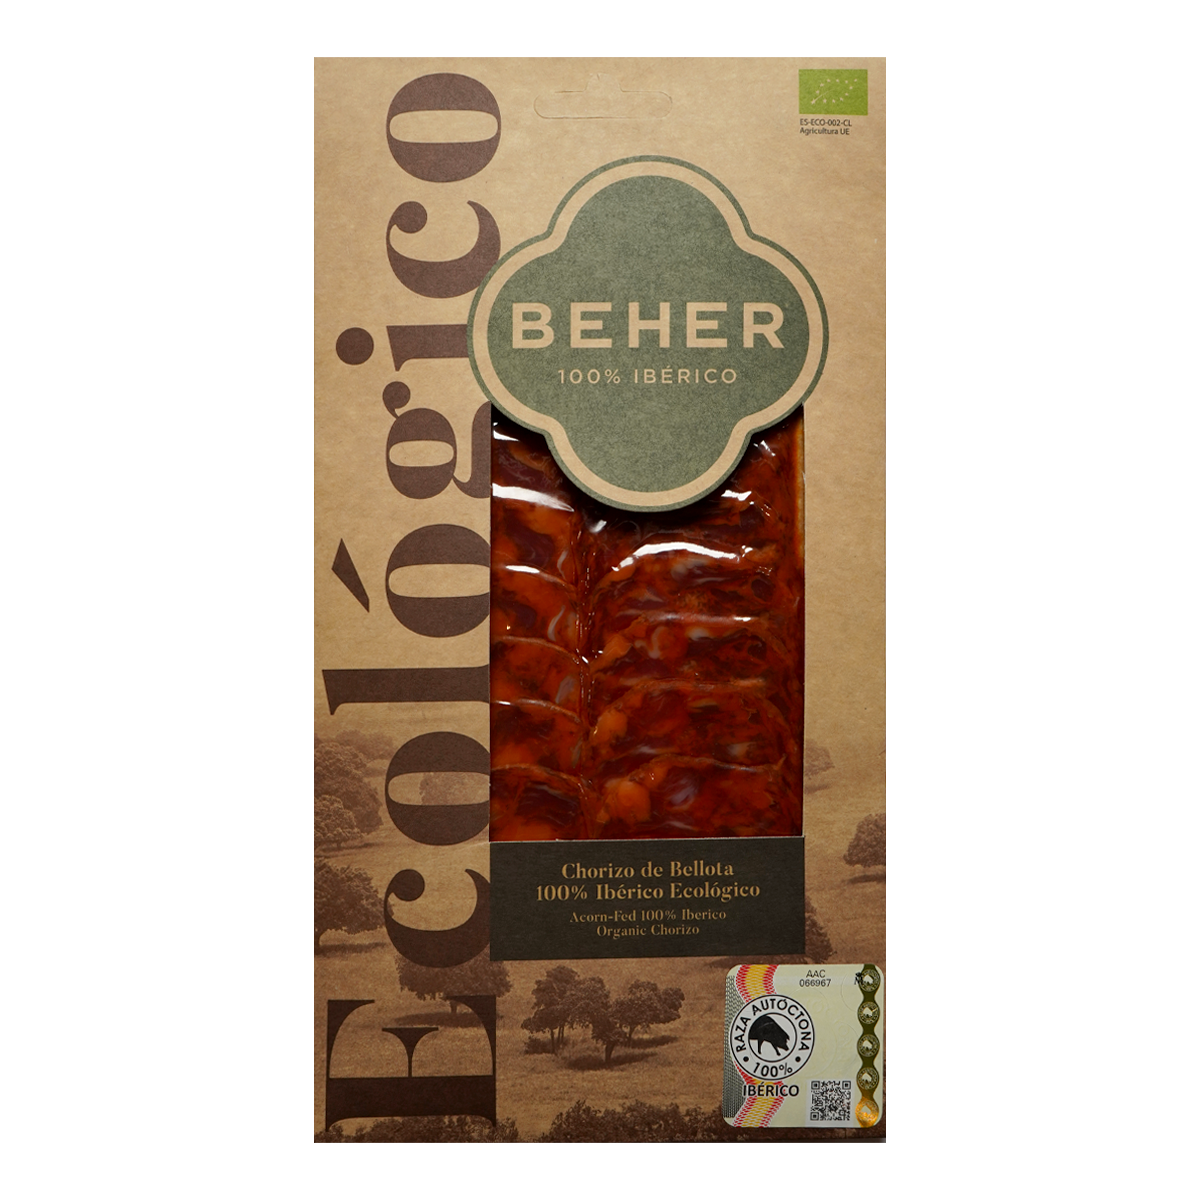 Acorn Fed 100% Iberico Organic Chorizo